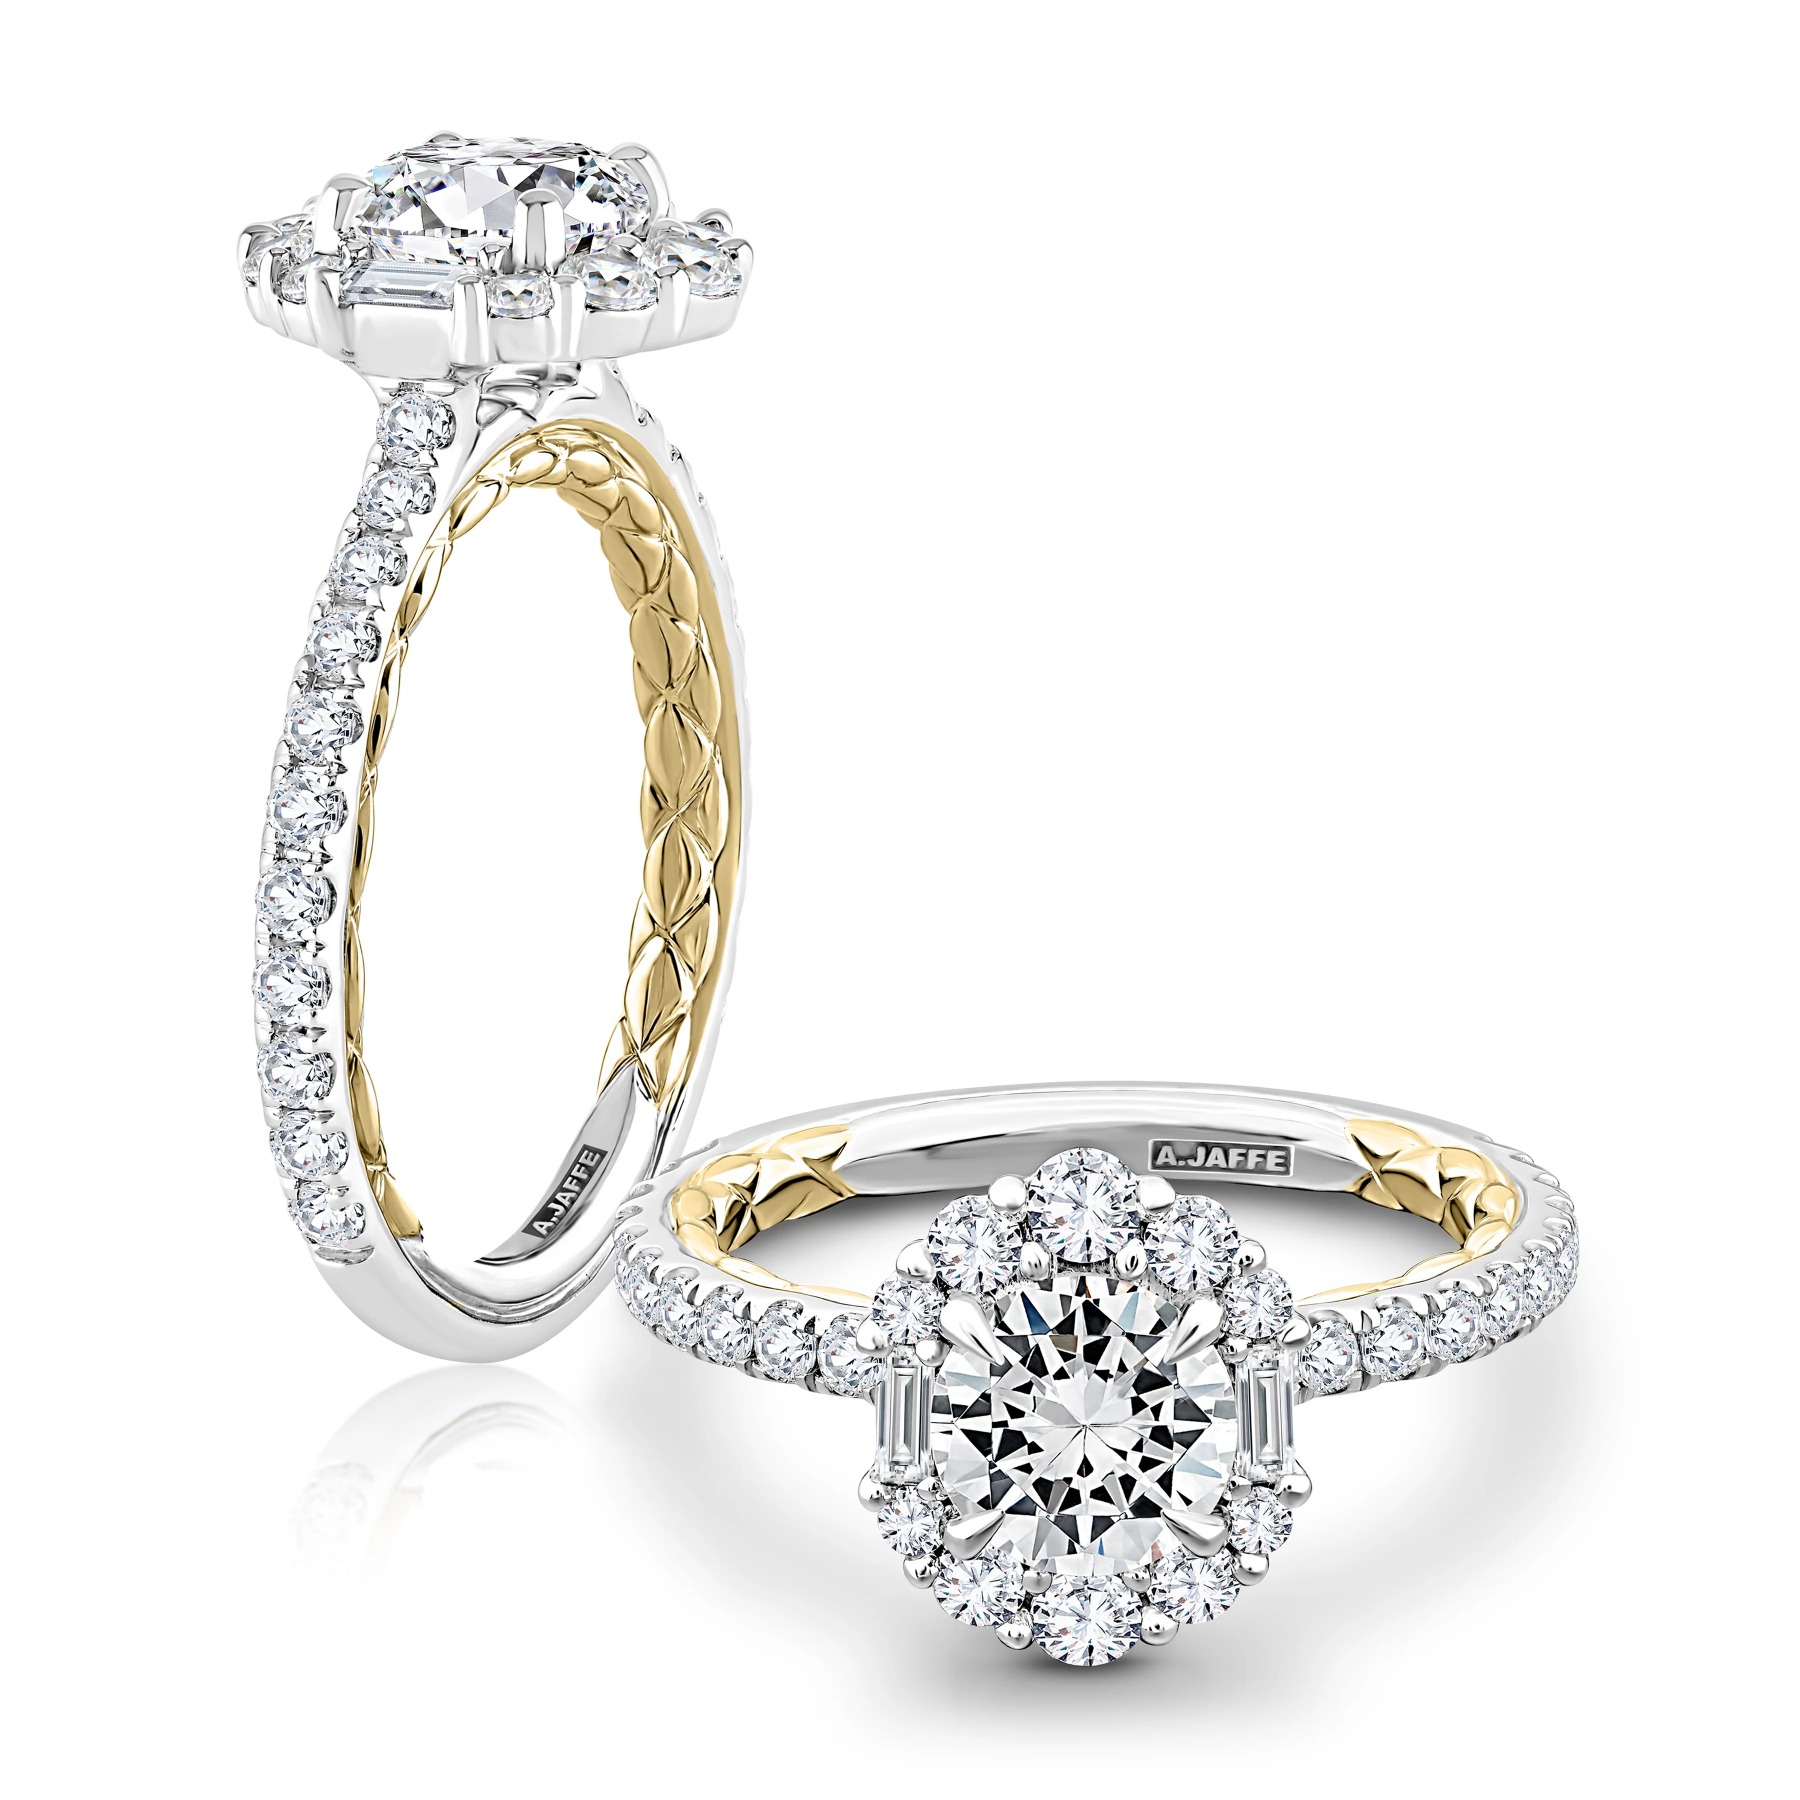 A.JAFFE diamond engagement ring